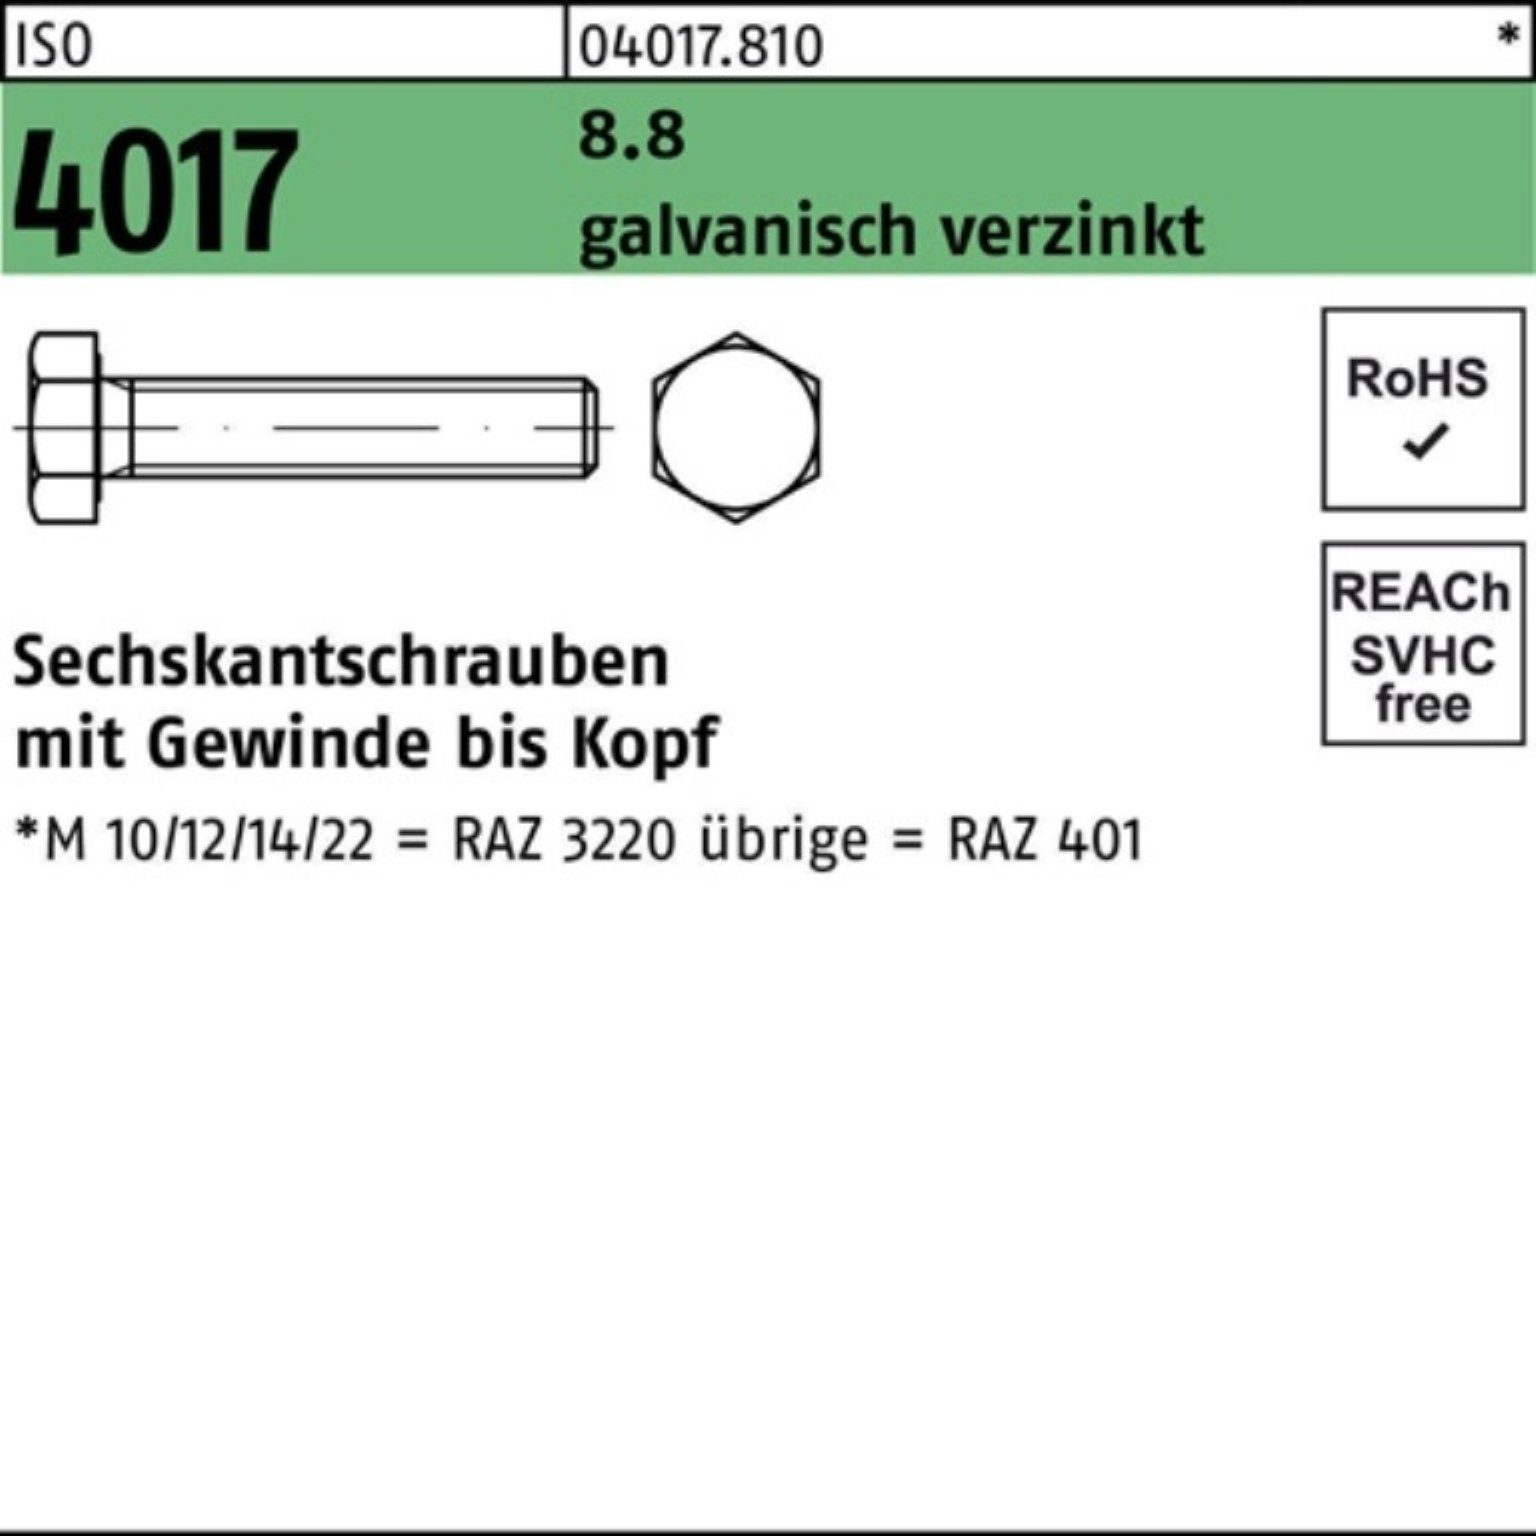 VG ISO Bufab Sechskantschraube 4017 Pack 30 St Sechskantschraube galv.verz. 8.8 100er 50 M18x